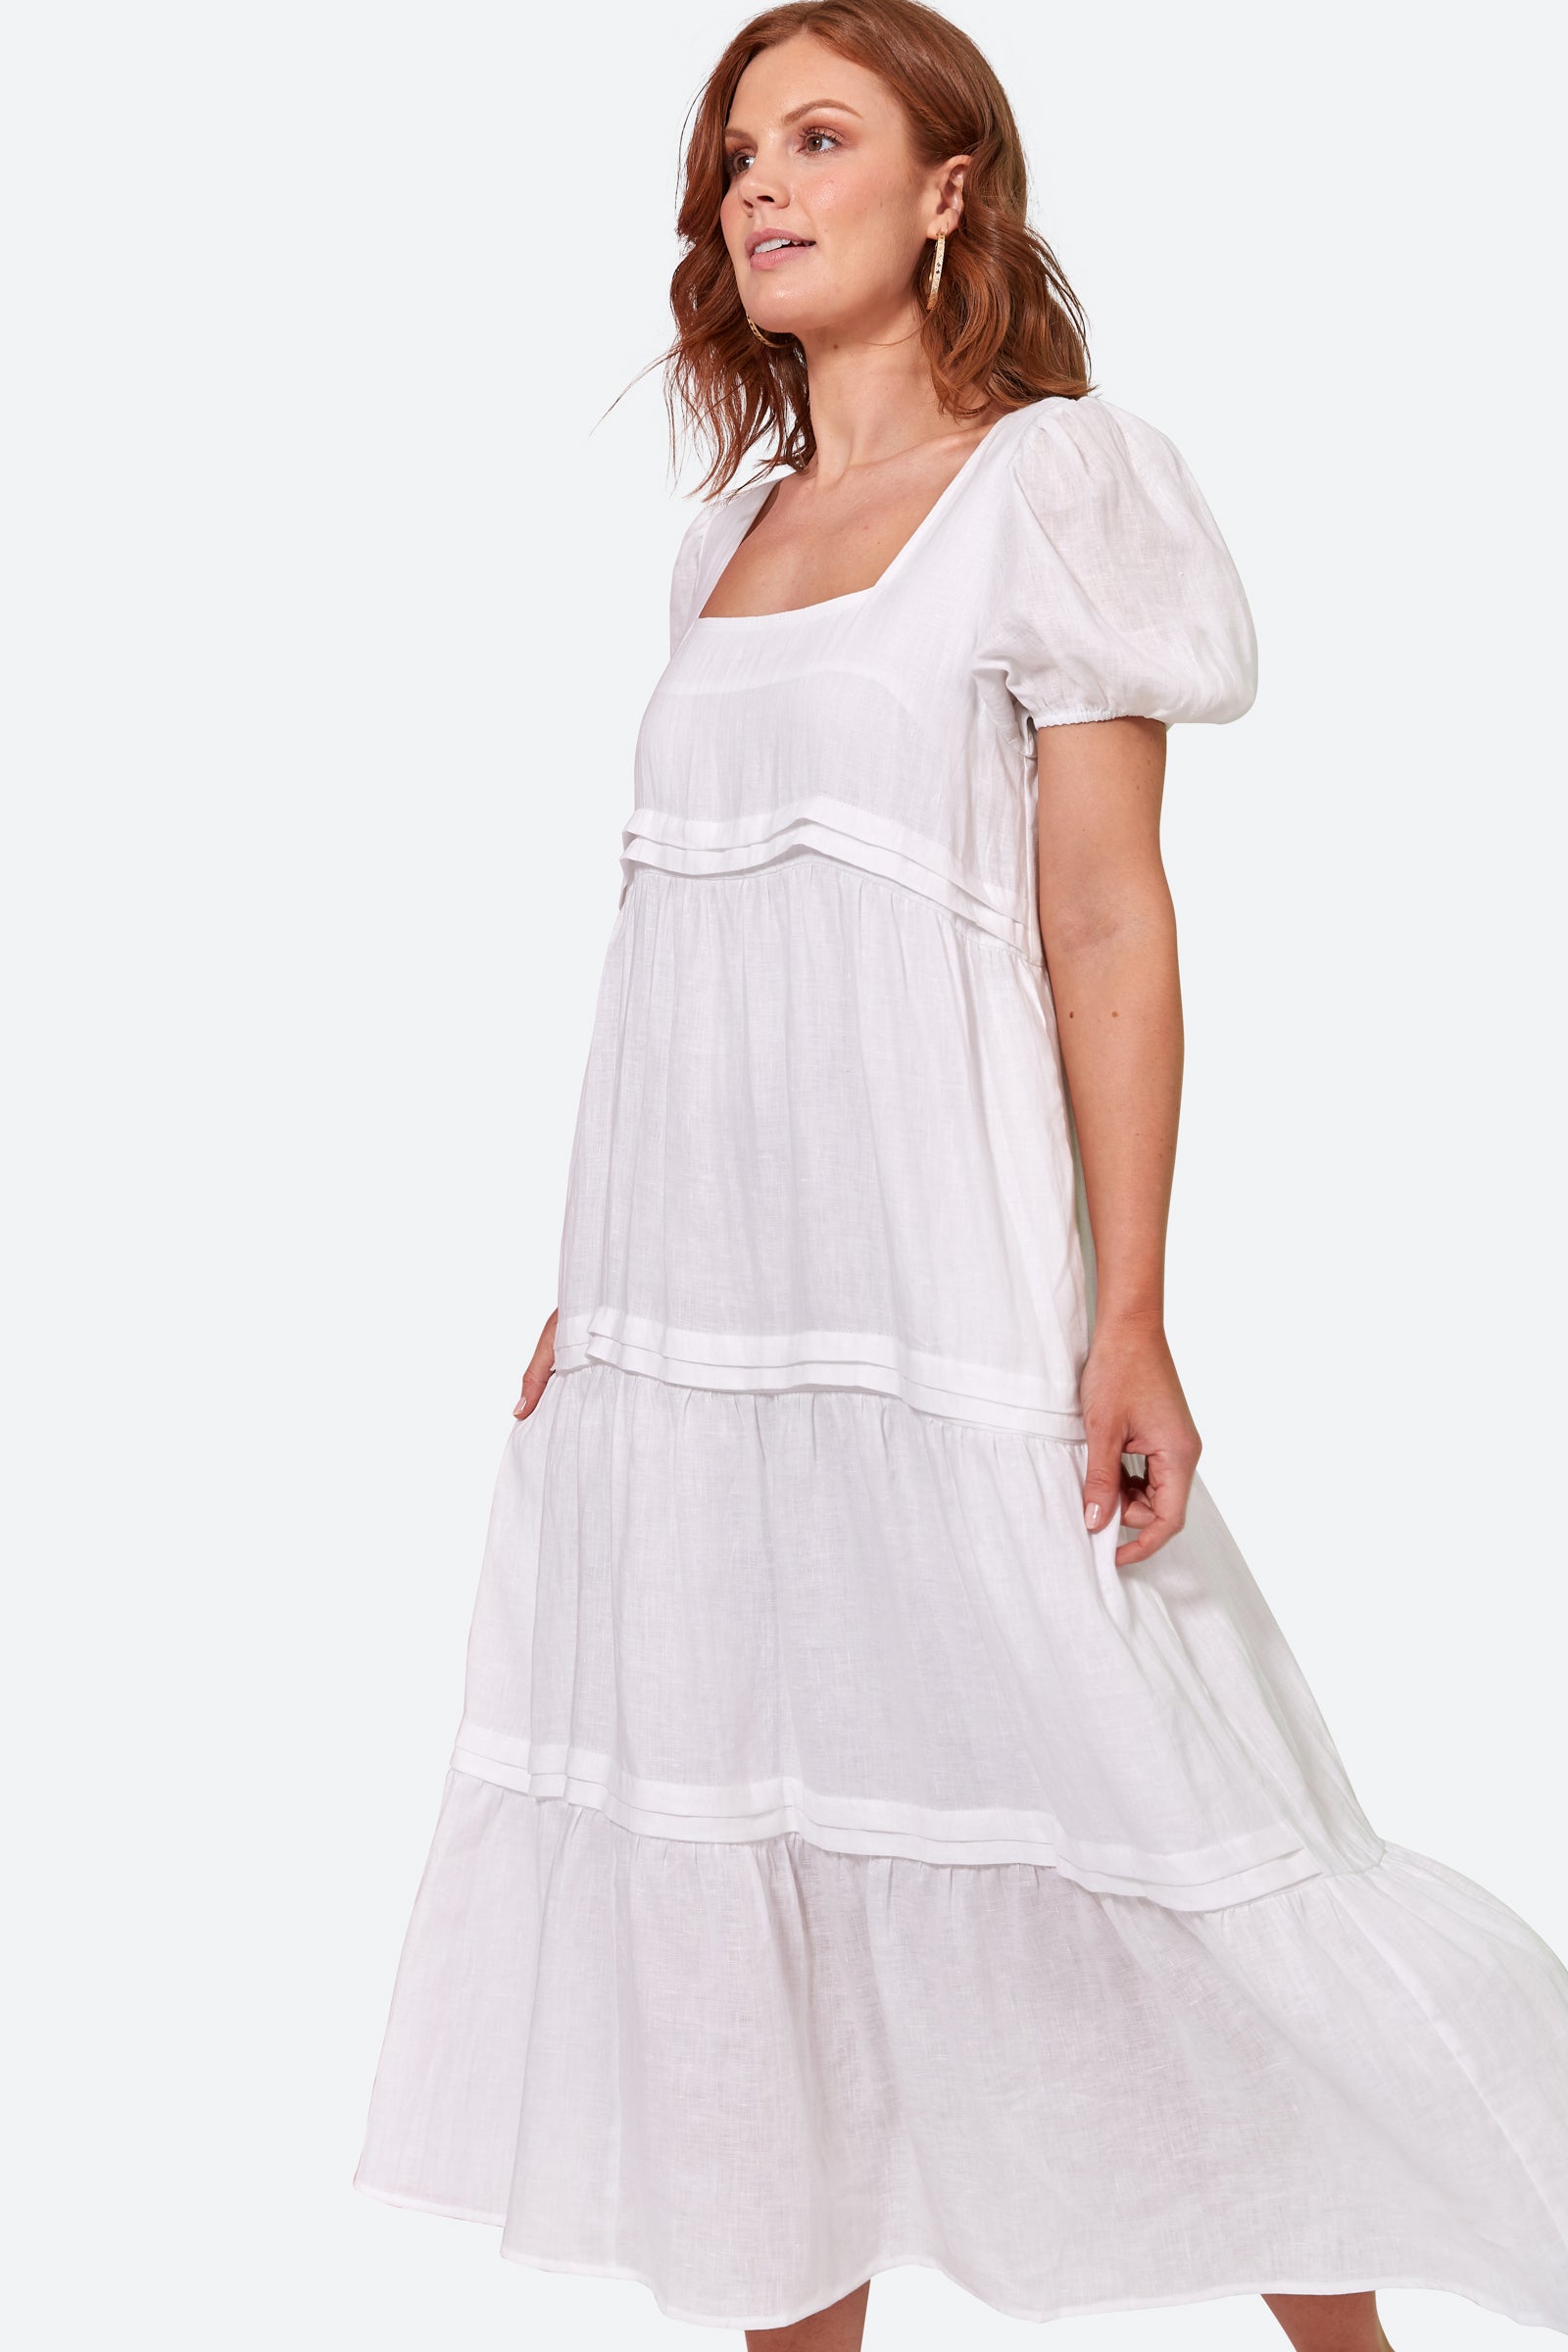 La Vie Pintuck Maxi - Blanc - eb&ive Clothing - Dress Maxi Linen